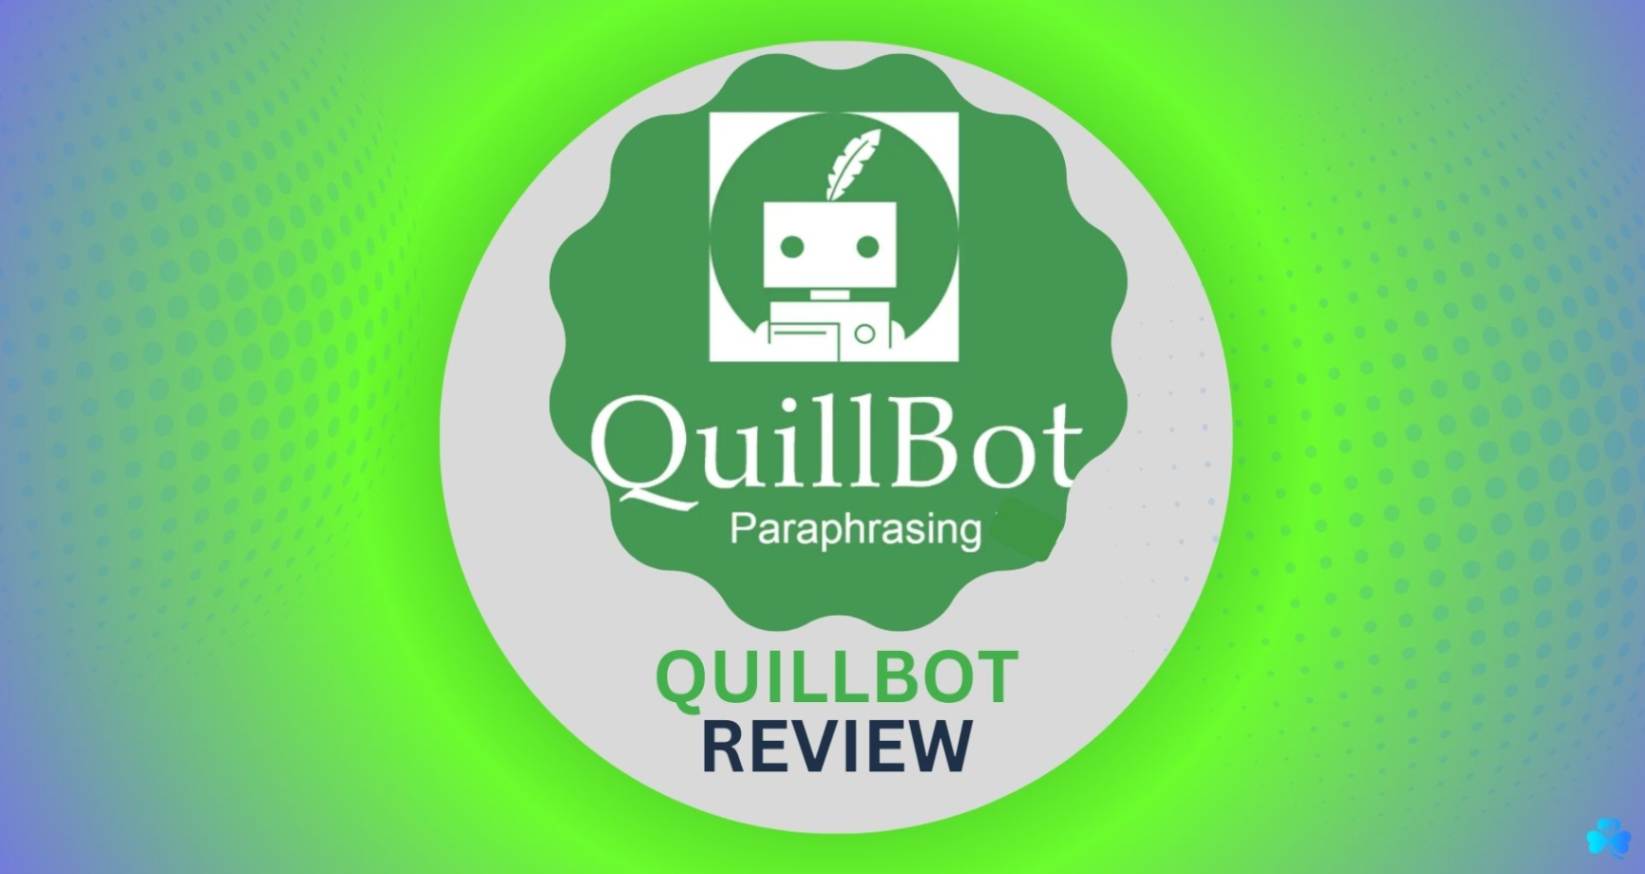 Quillbot featured image logo